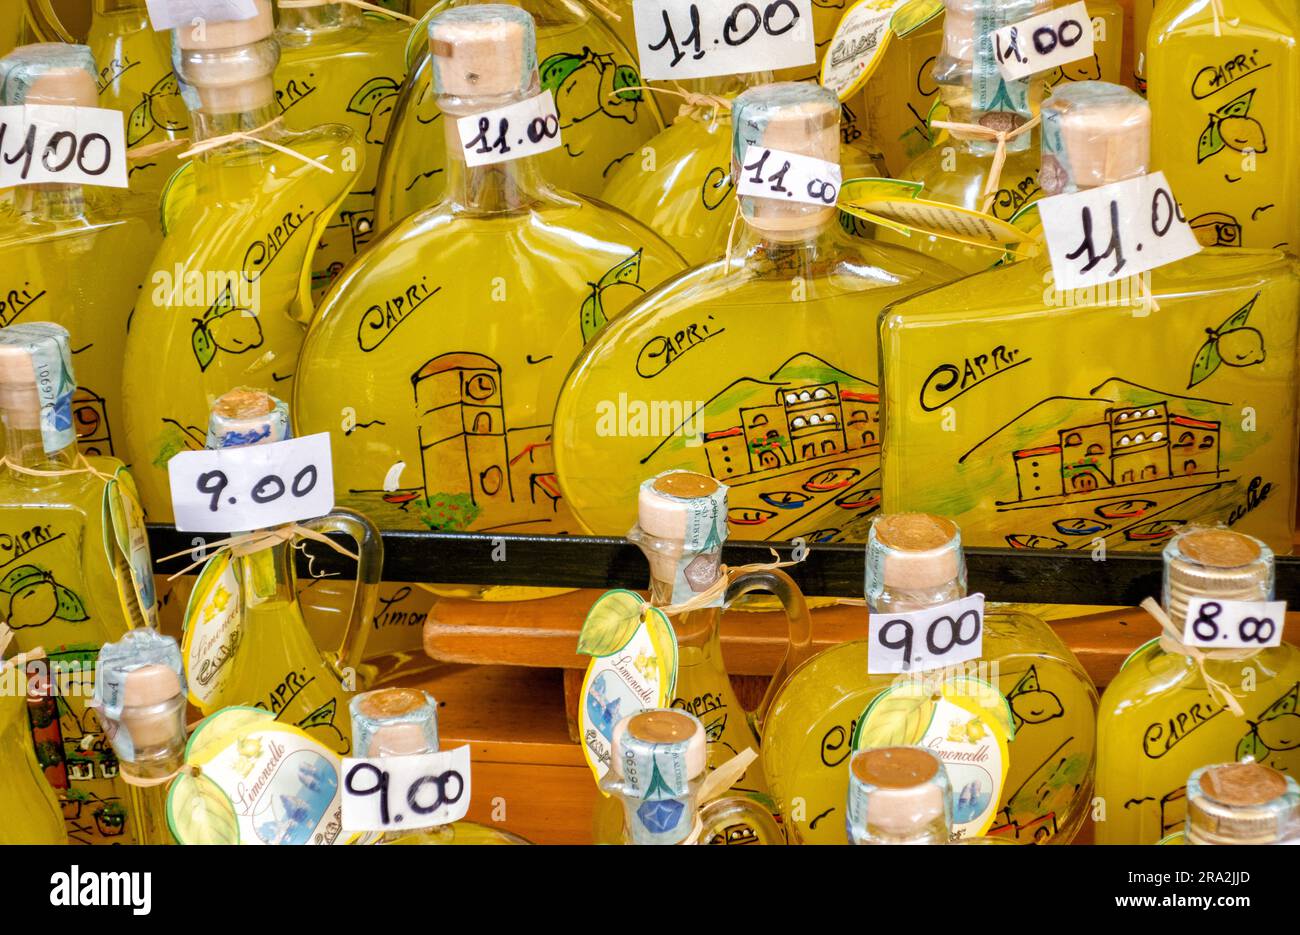 https://c8.alamy.com/comp/2RA2JJD/shop-selling-locally-produced-bottles-of-limoncello-liqueur-on-the-island-of-capri-in-the-tyrrhenian-sea-off-the-sorrento-peninsula-italy-2RA2JJD.jpg